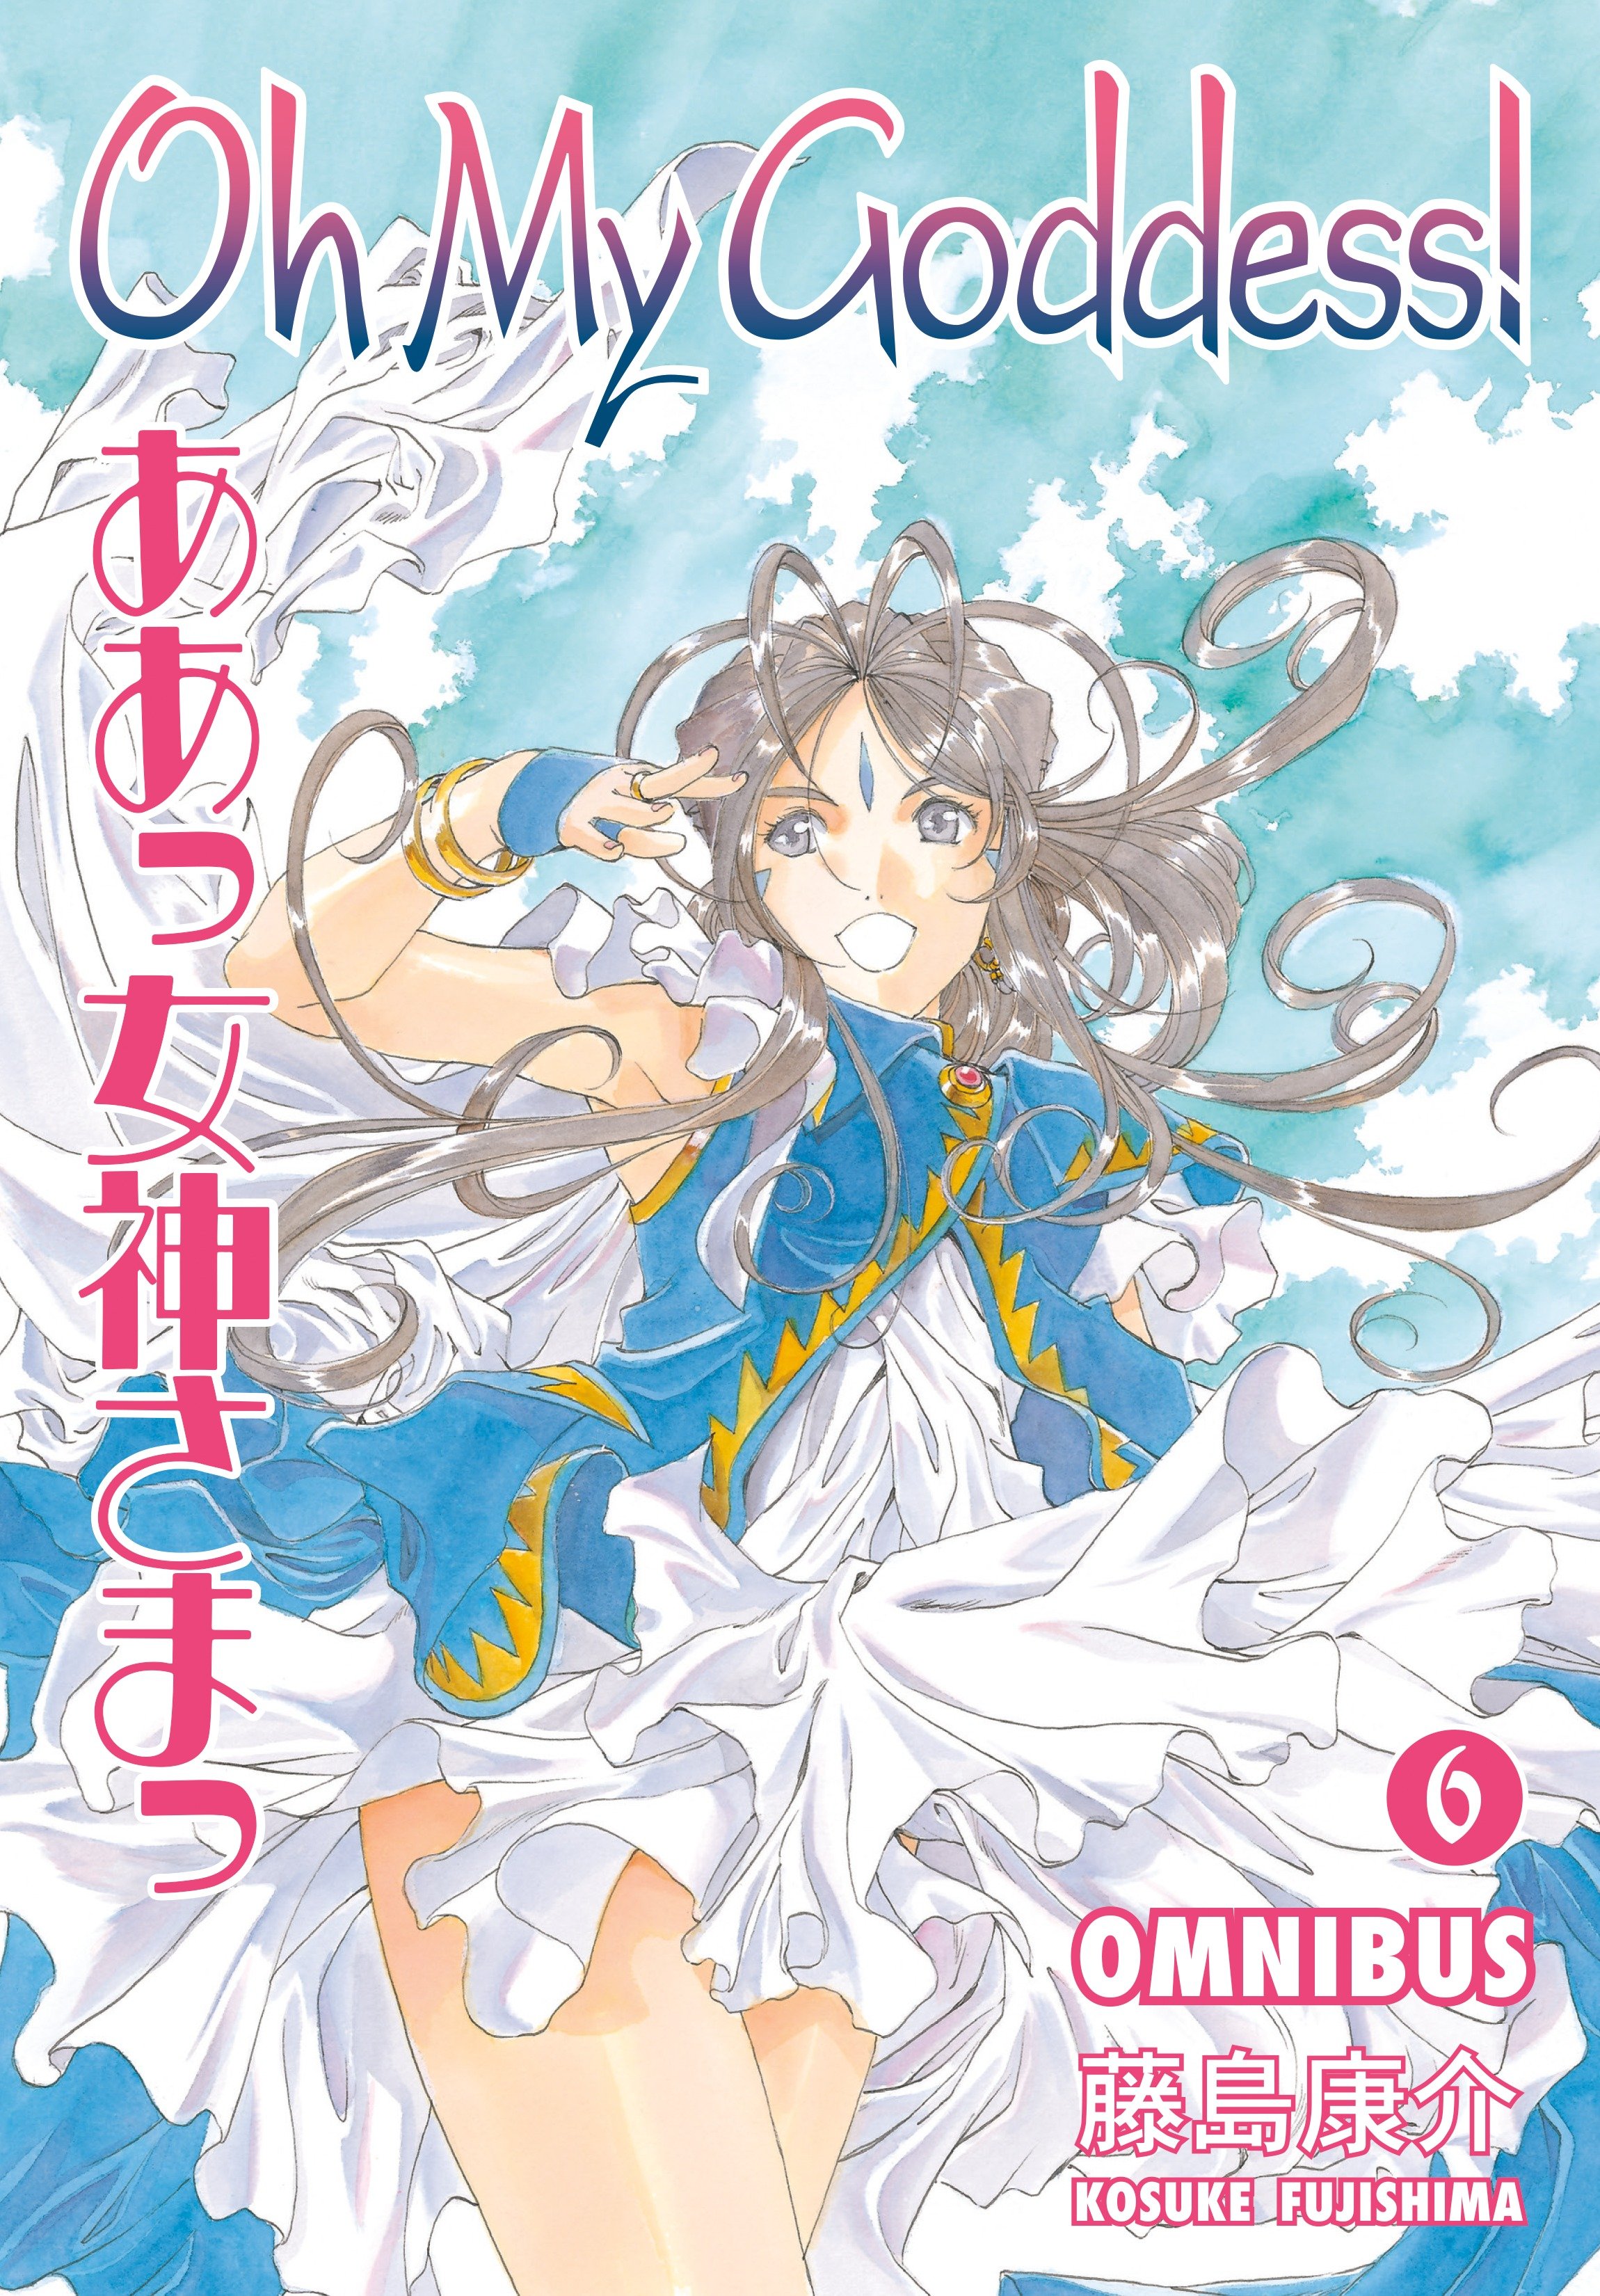 Oh My Goddess! Manga Omnibus Volume 6 image count 0